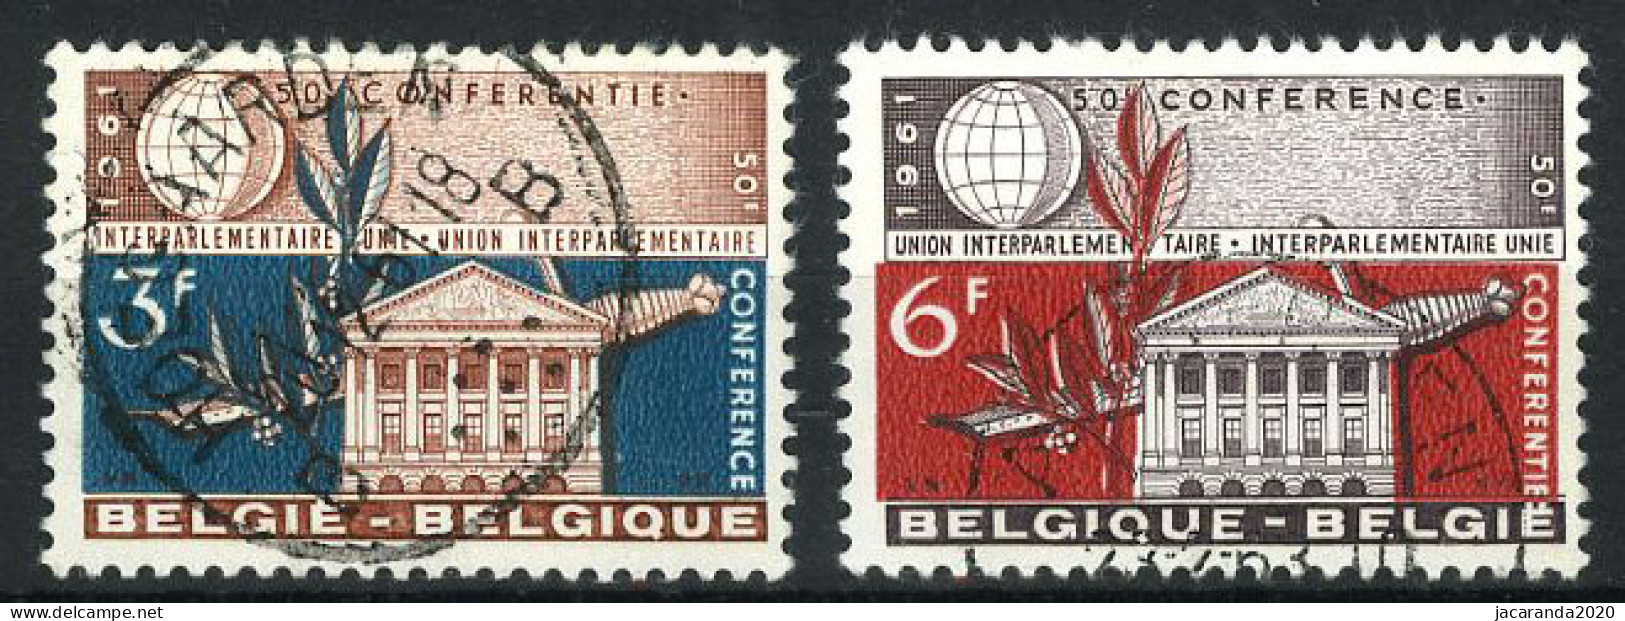 België 1191/92 - Interparlementaire Unie - Gestempeld - Oblitéré - Used - Usados